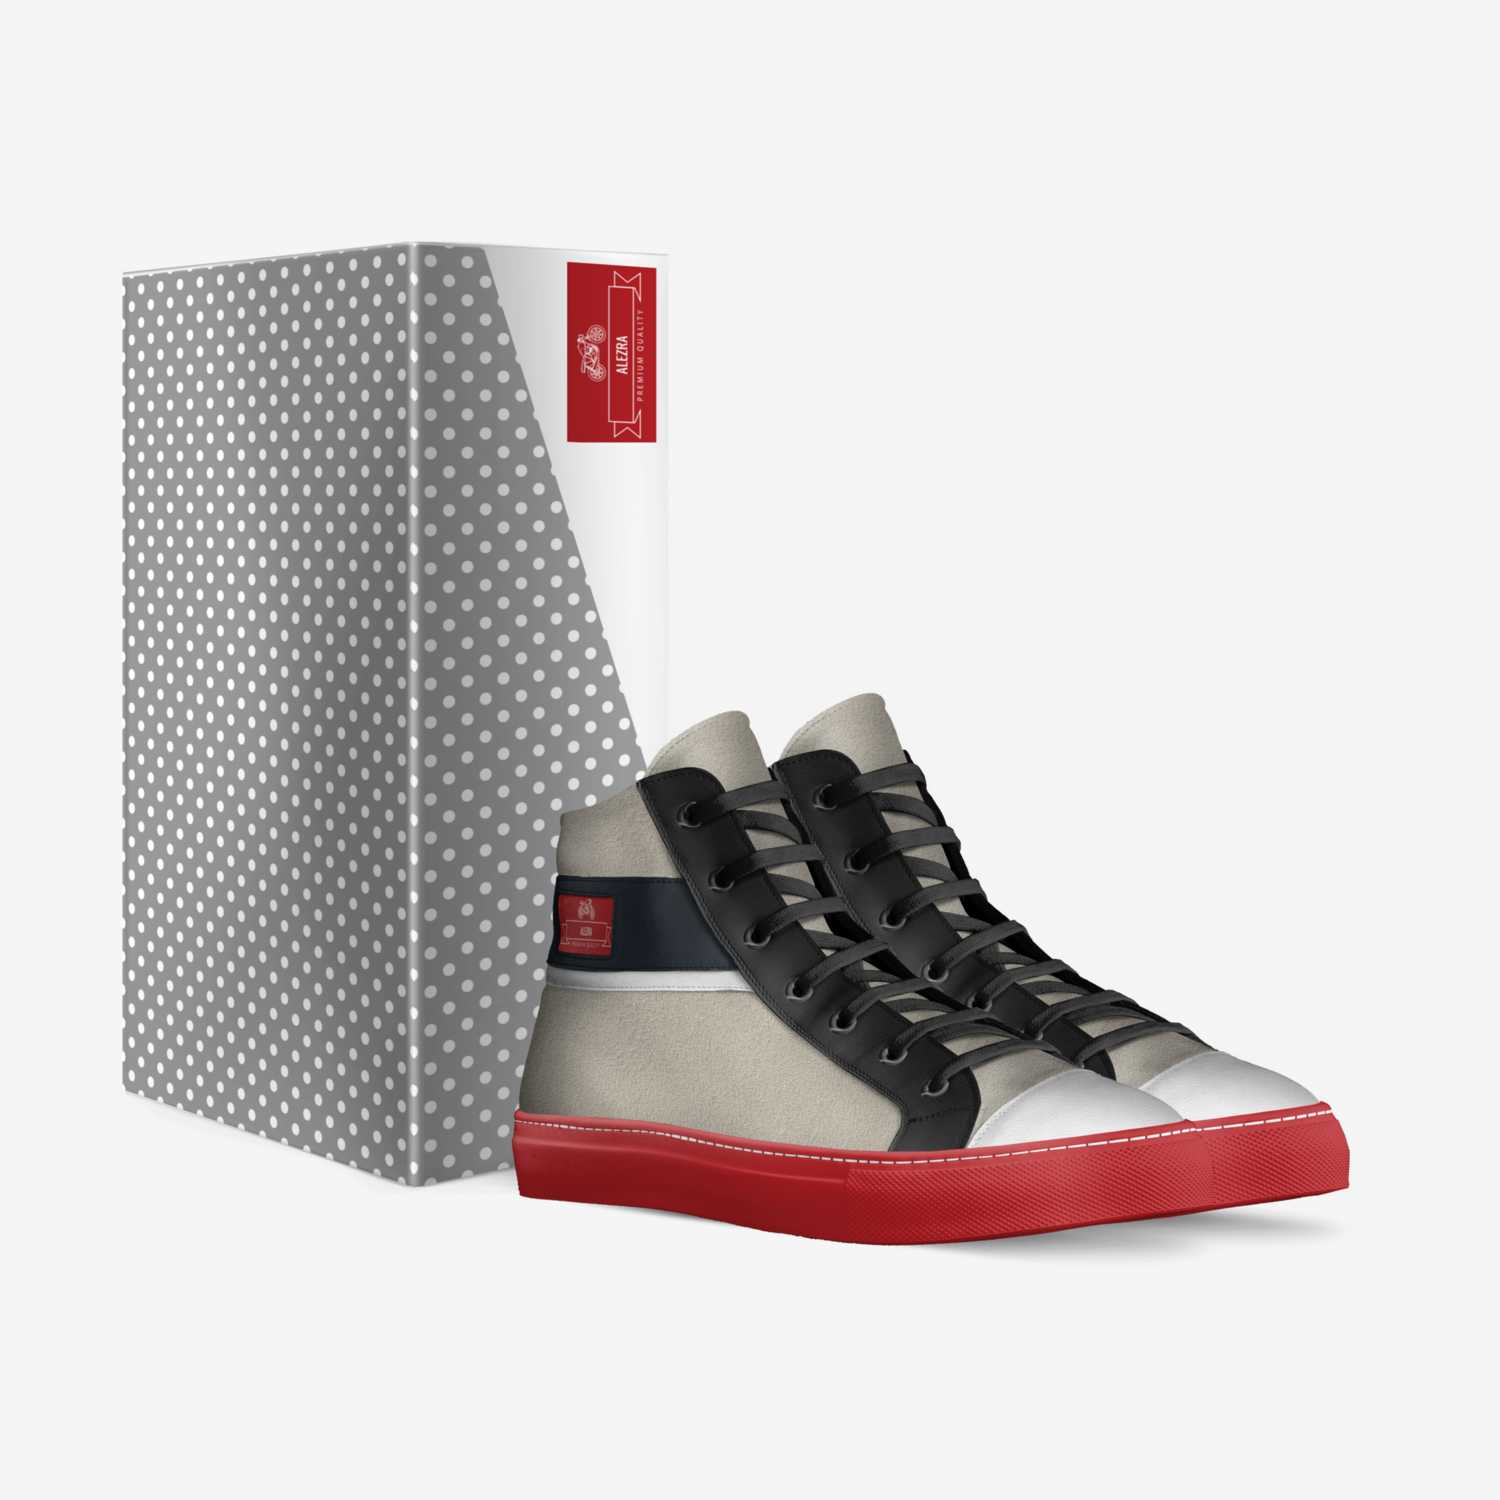 Alezra custom made in Italy shoes by Antonio Soto | Box view